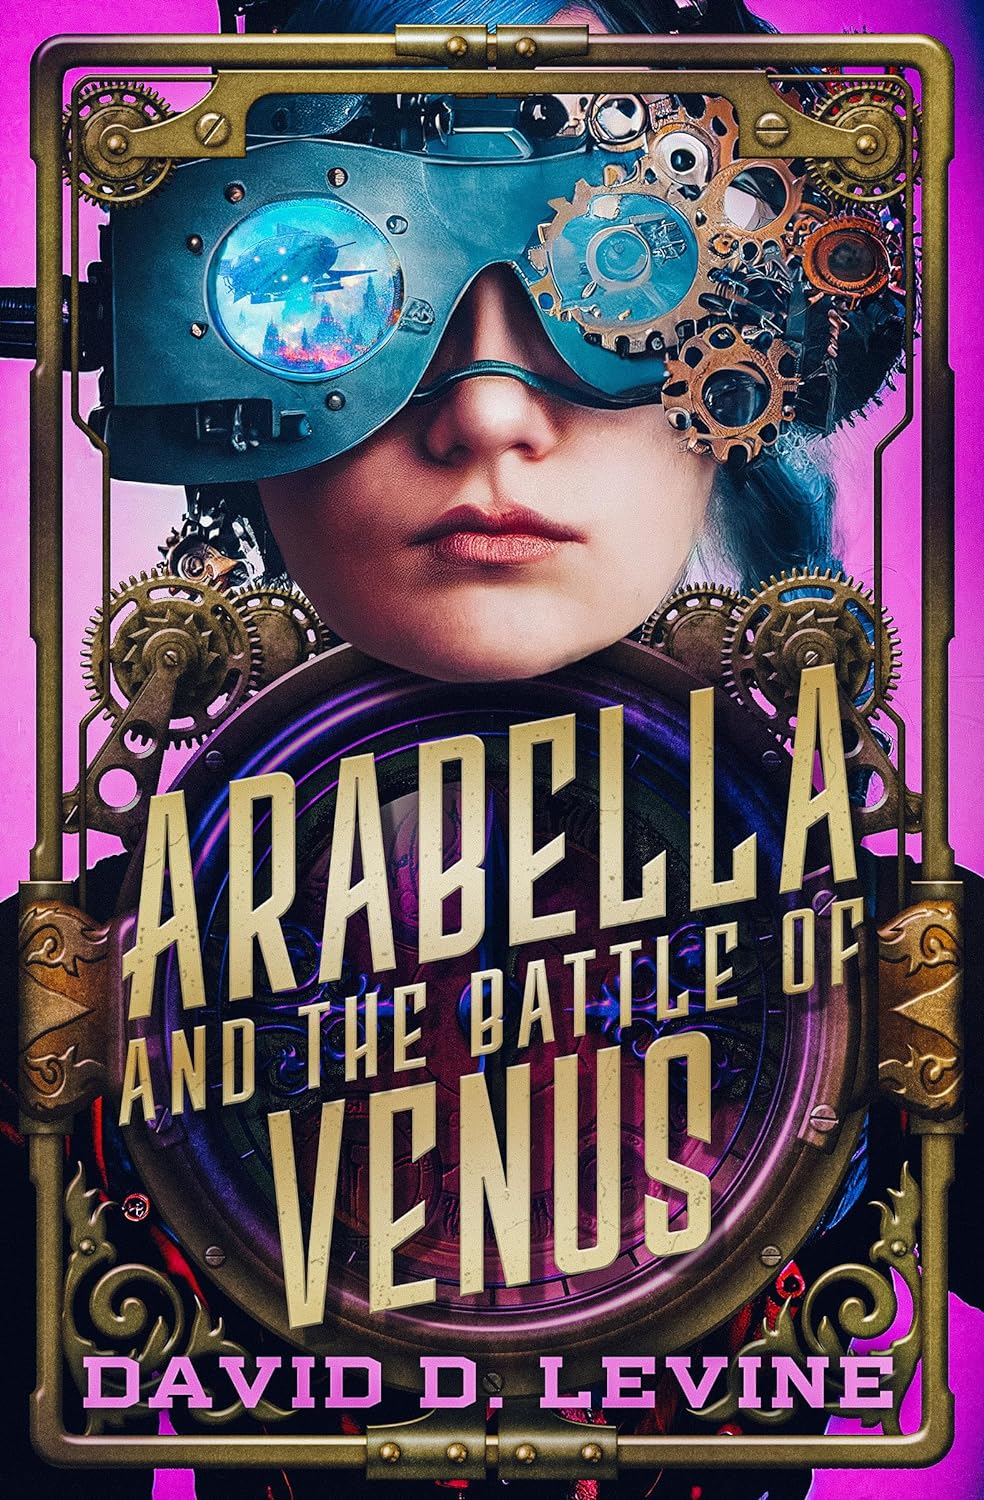 Arbella and the Battle of Venus